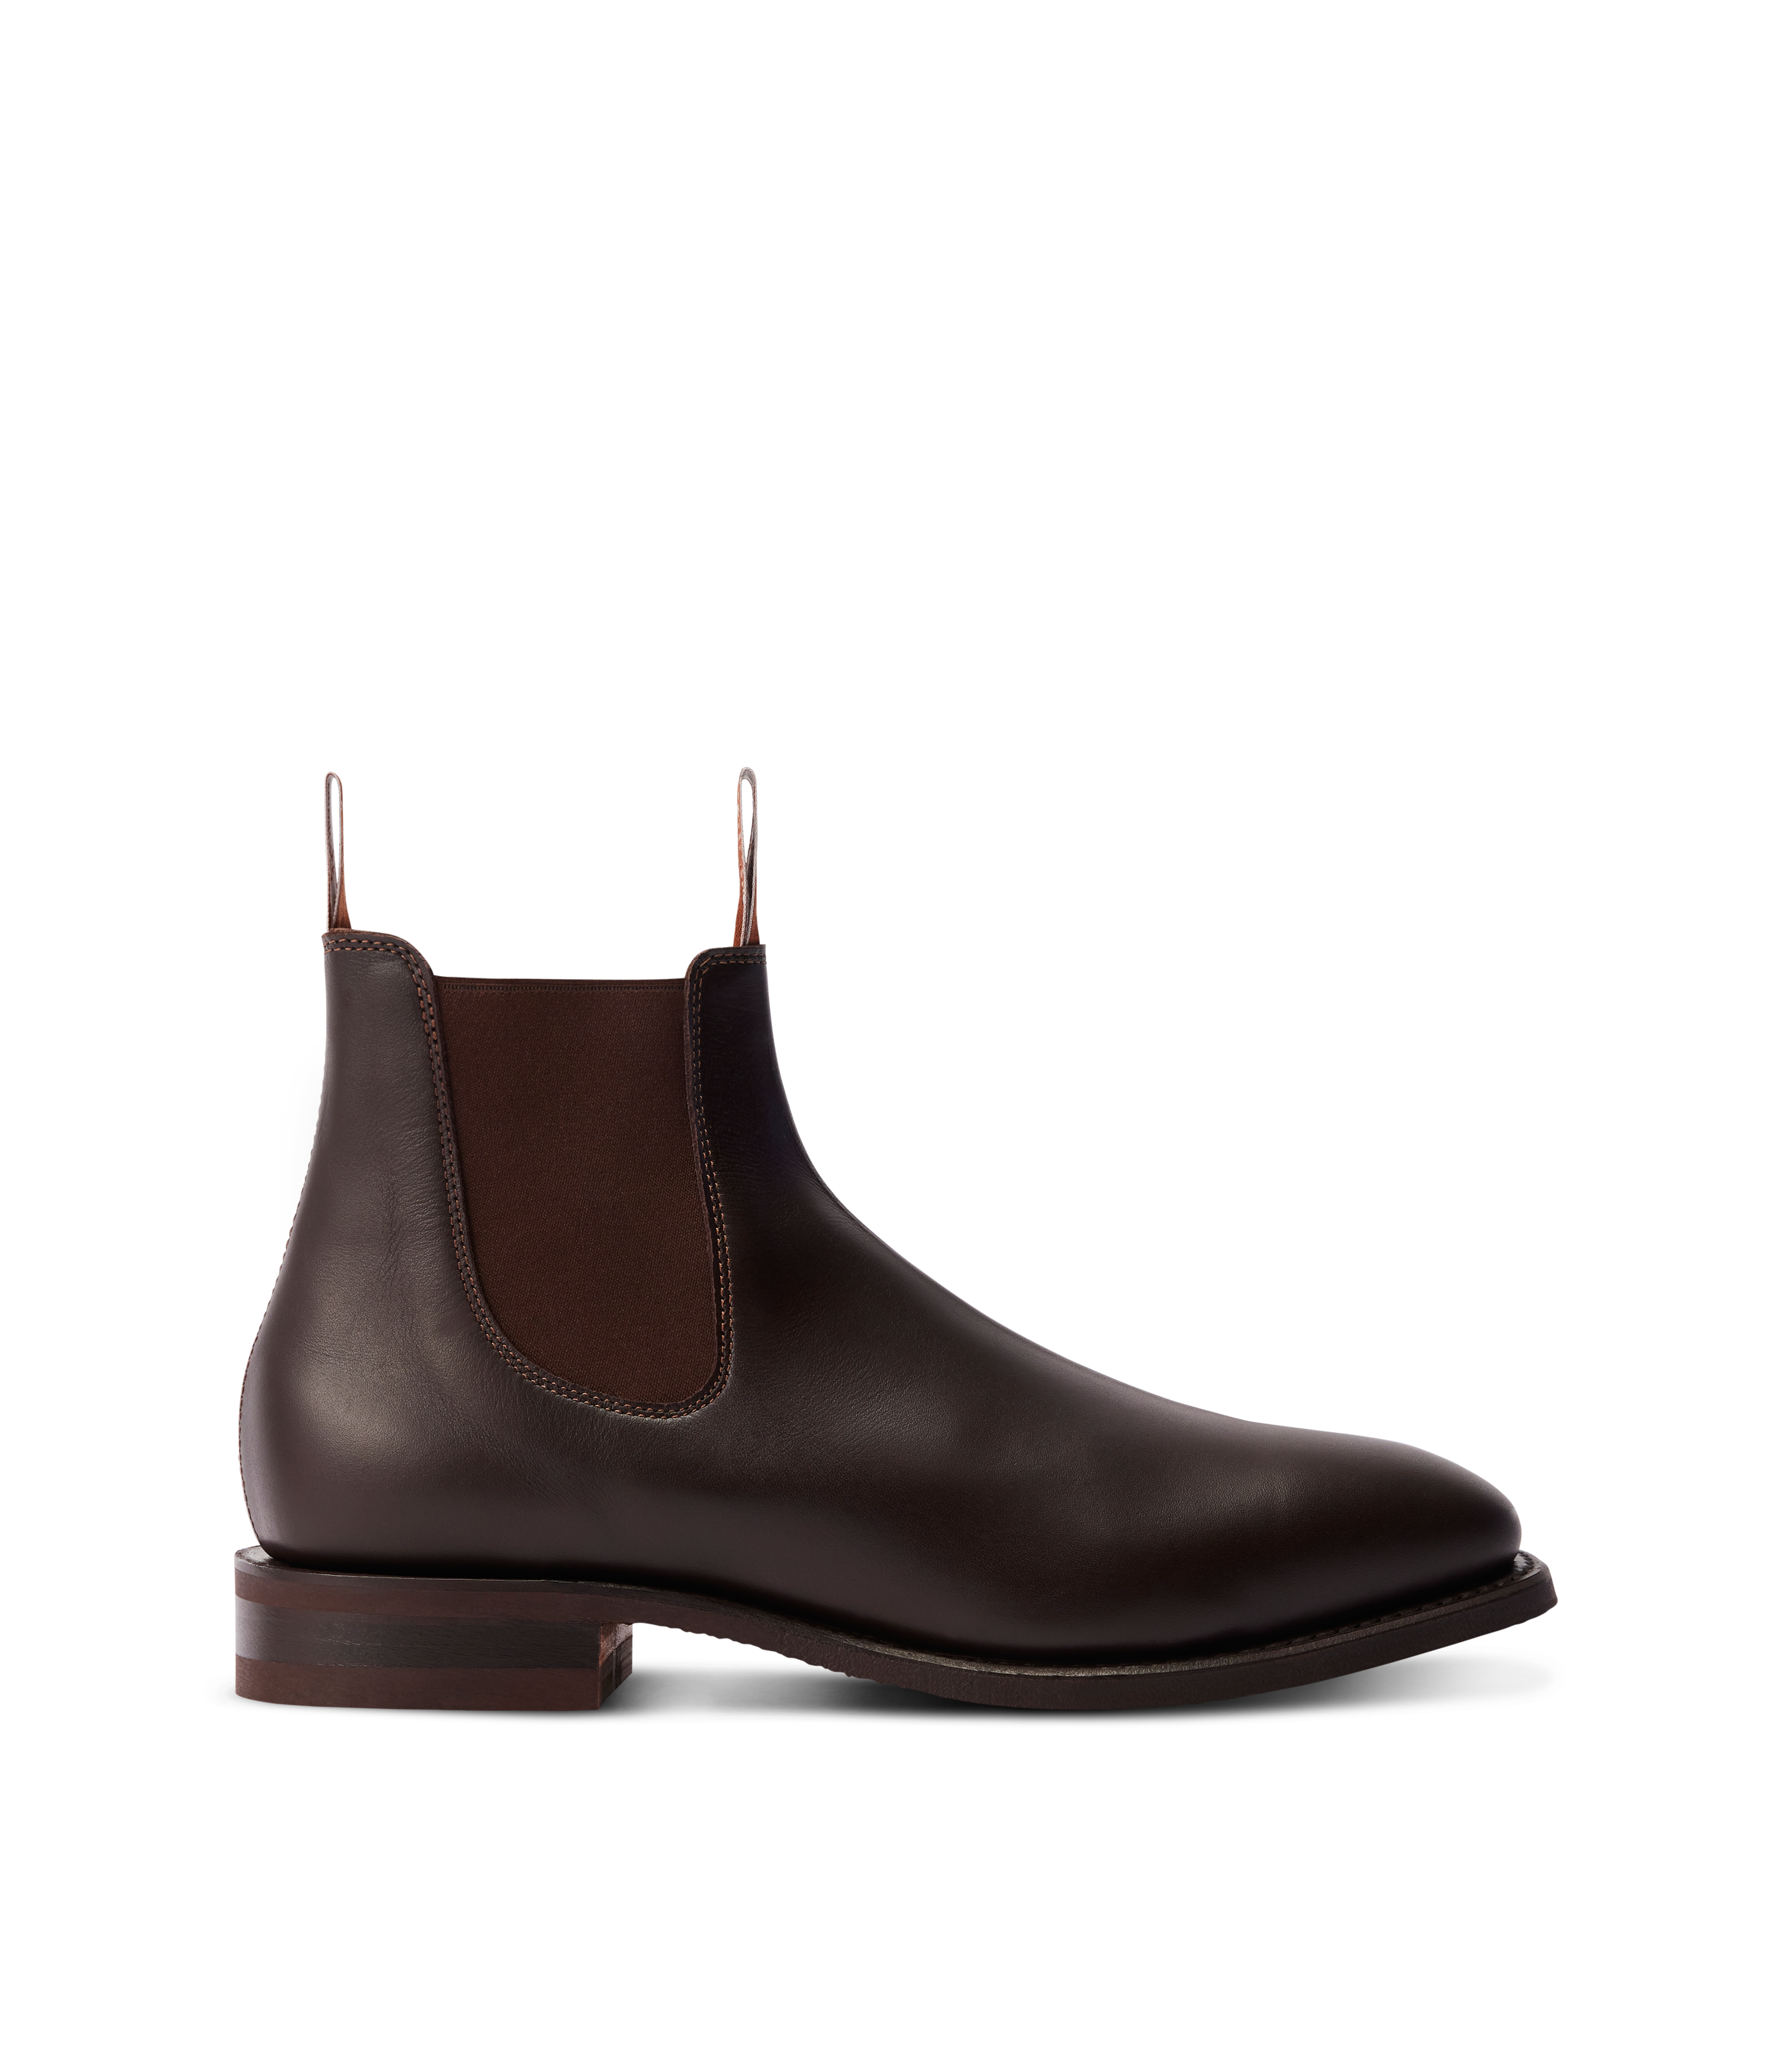  R.M. Williams Men's Classic RM Leather Chelsea Boots,  Chestnut, Brown, 6 Medium US